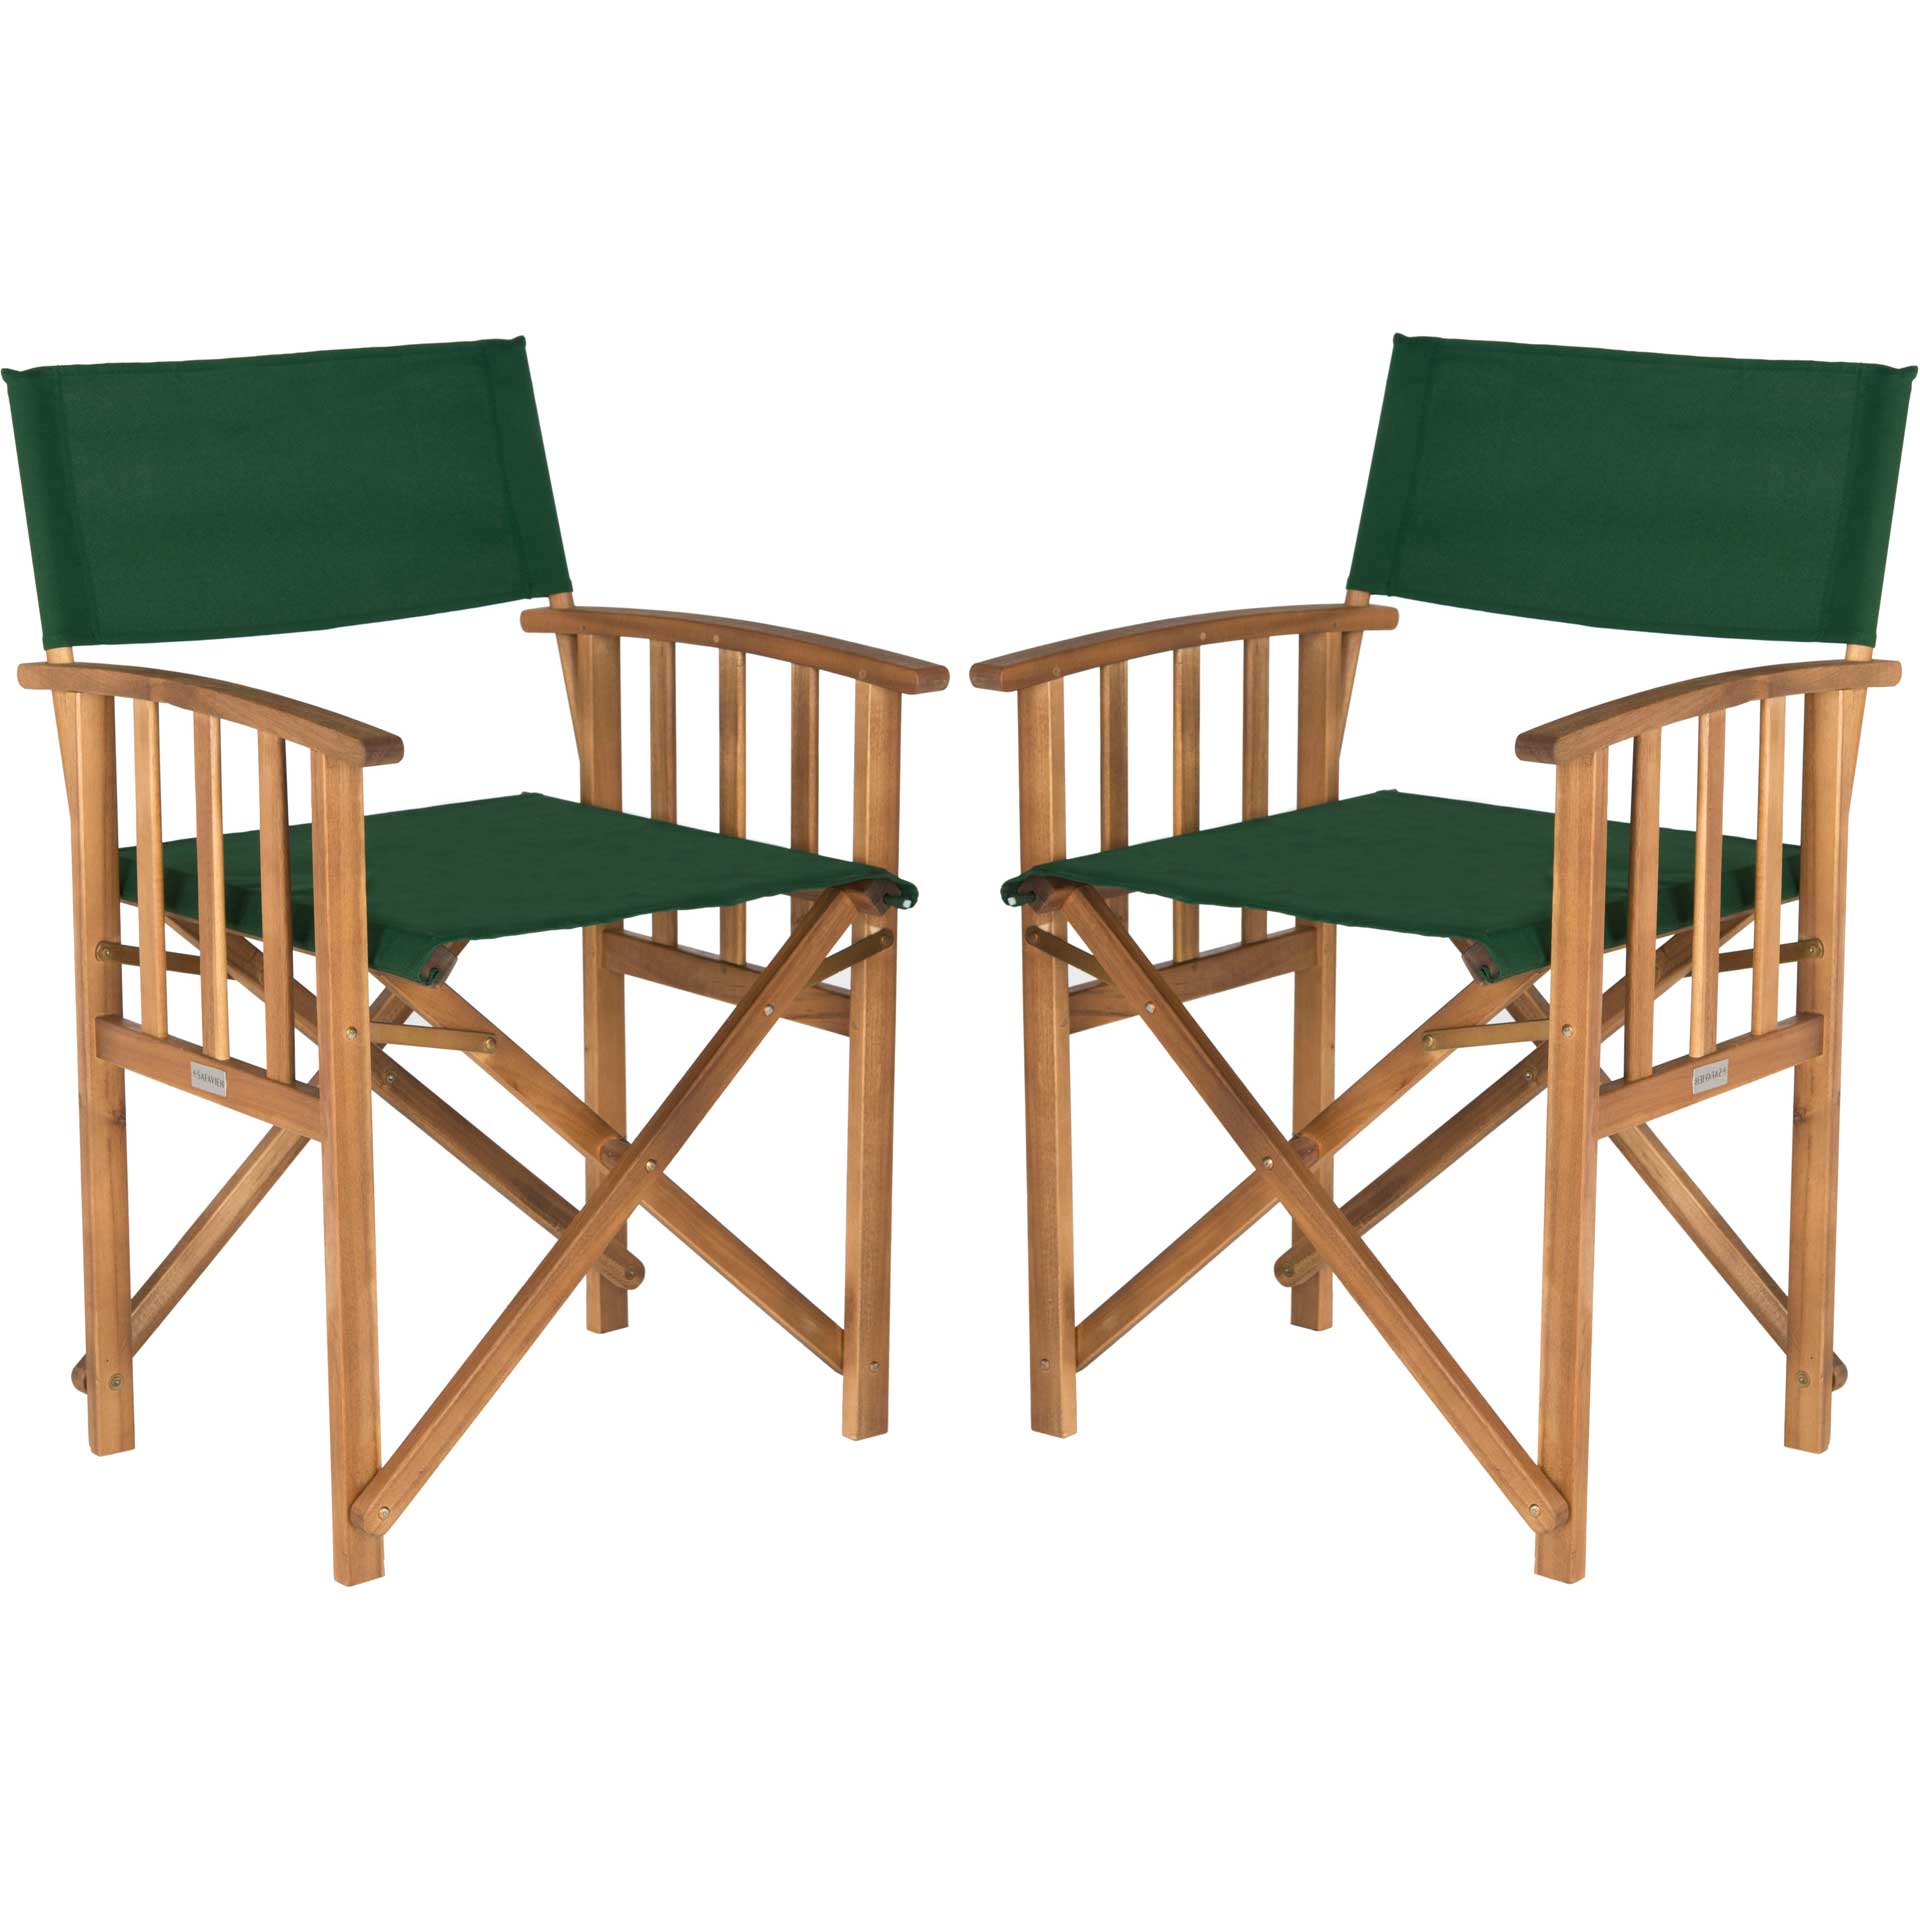 Lachlyn Director Chair Teak/Green (Set of 2)